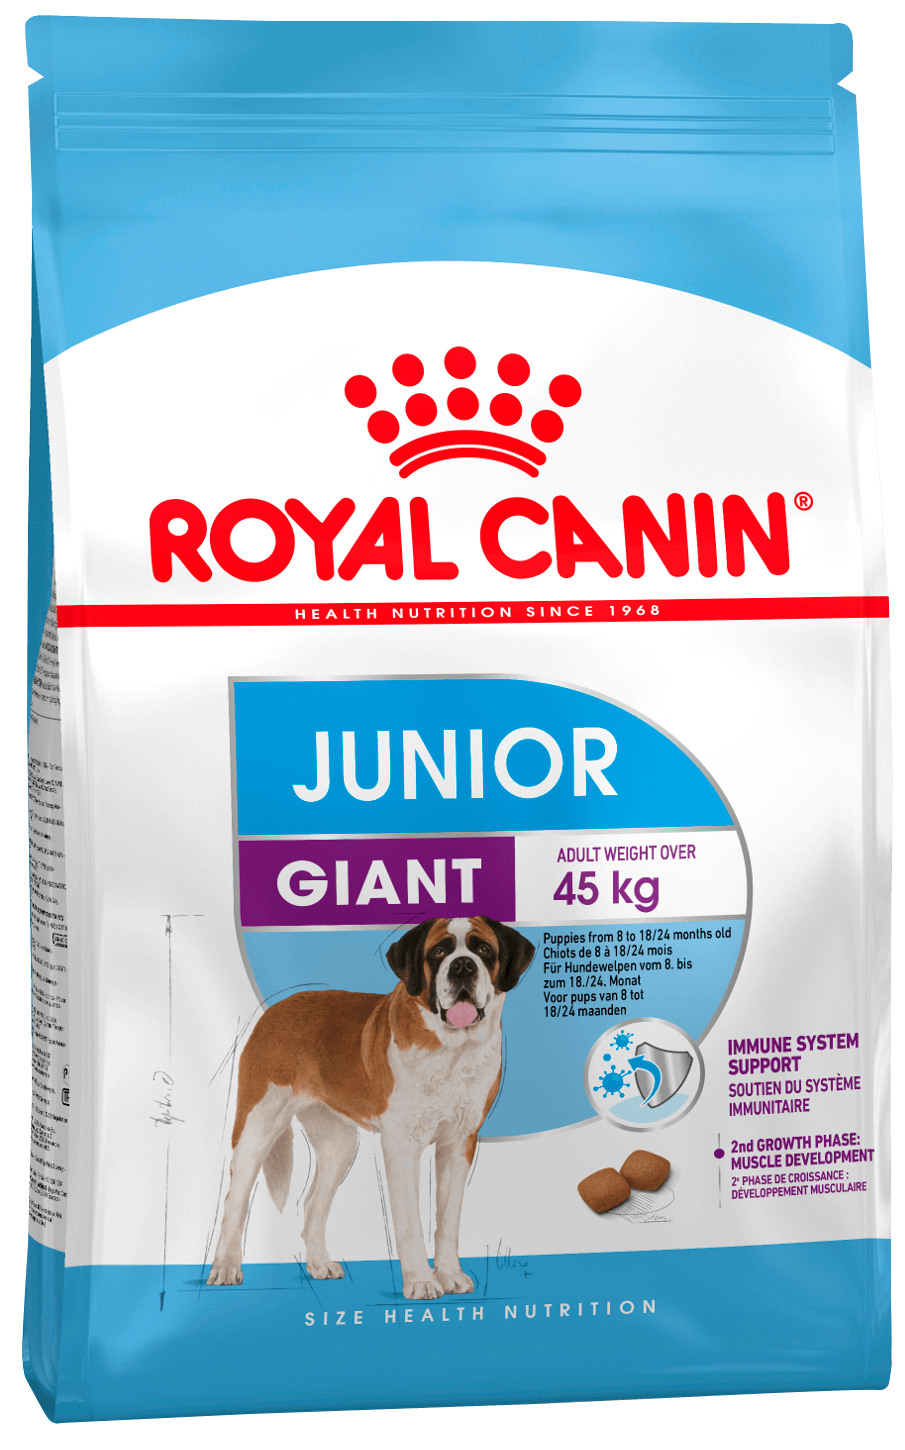 ROYAL CANIN Giant Junior - Корм для щенков с 8 до 18/24 месяцев